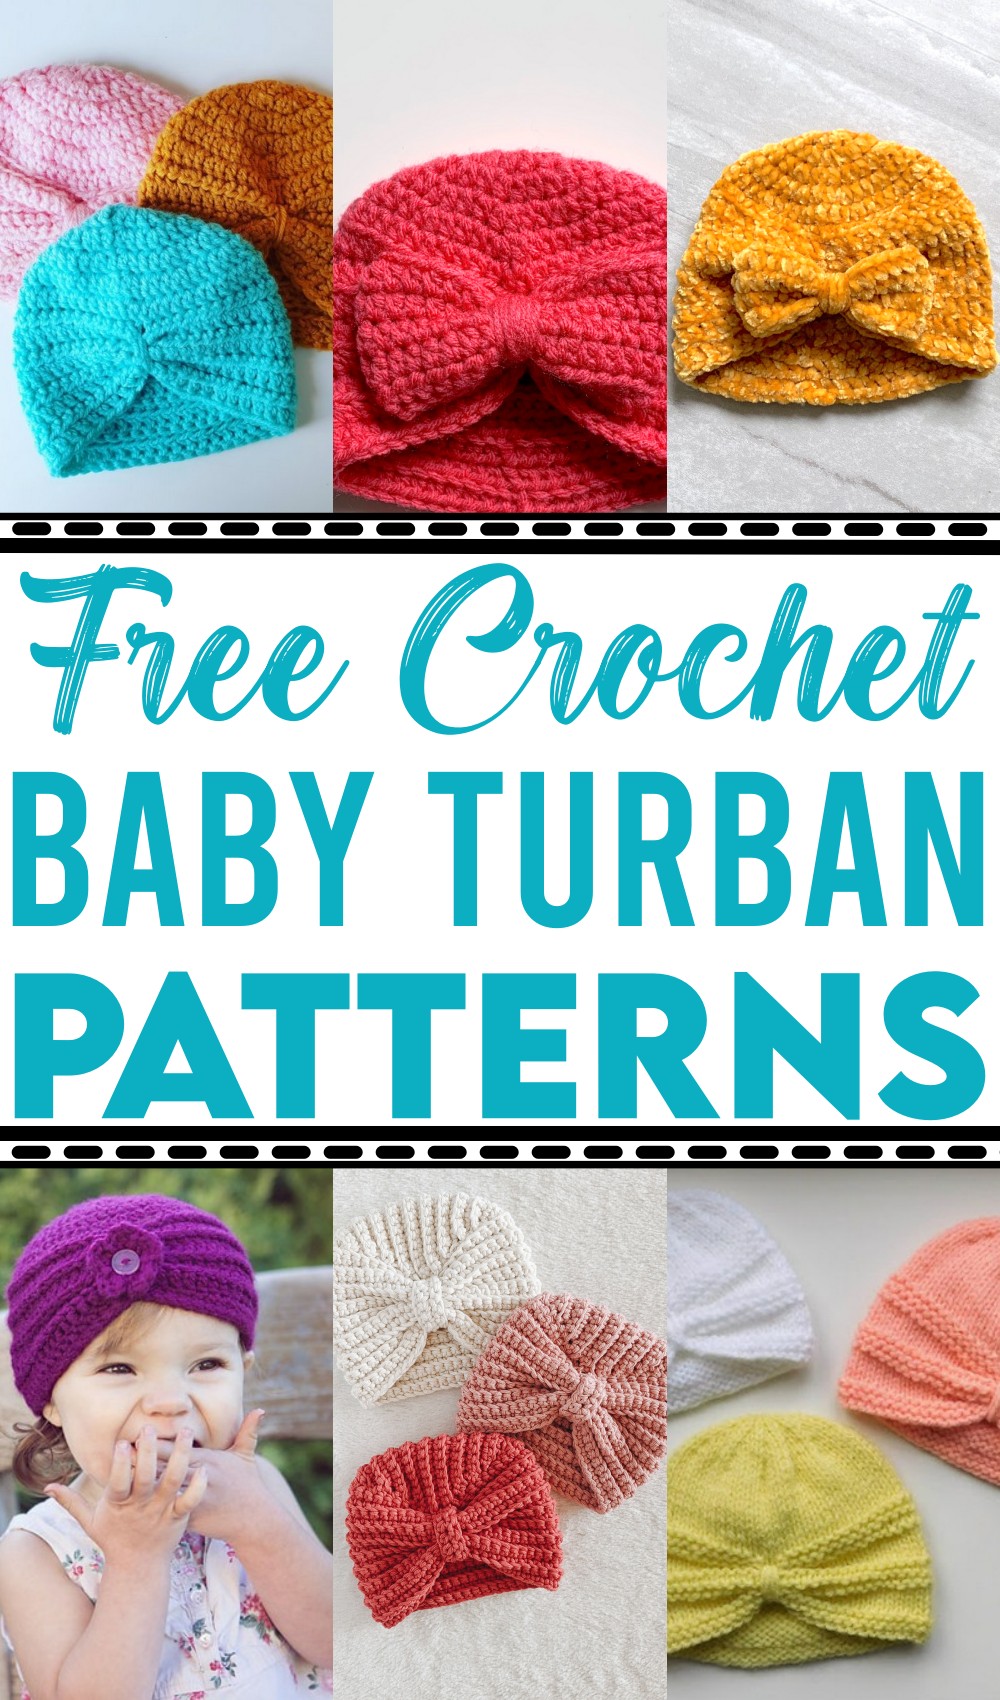 Crochet Baby Turban Patterns 1